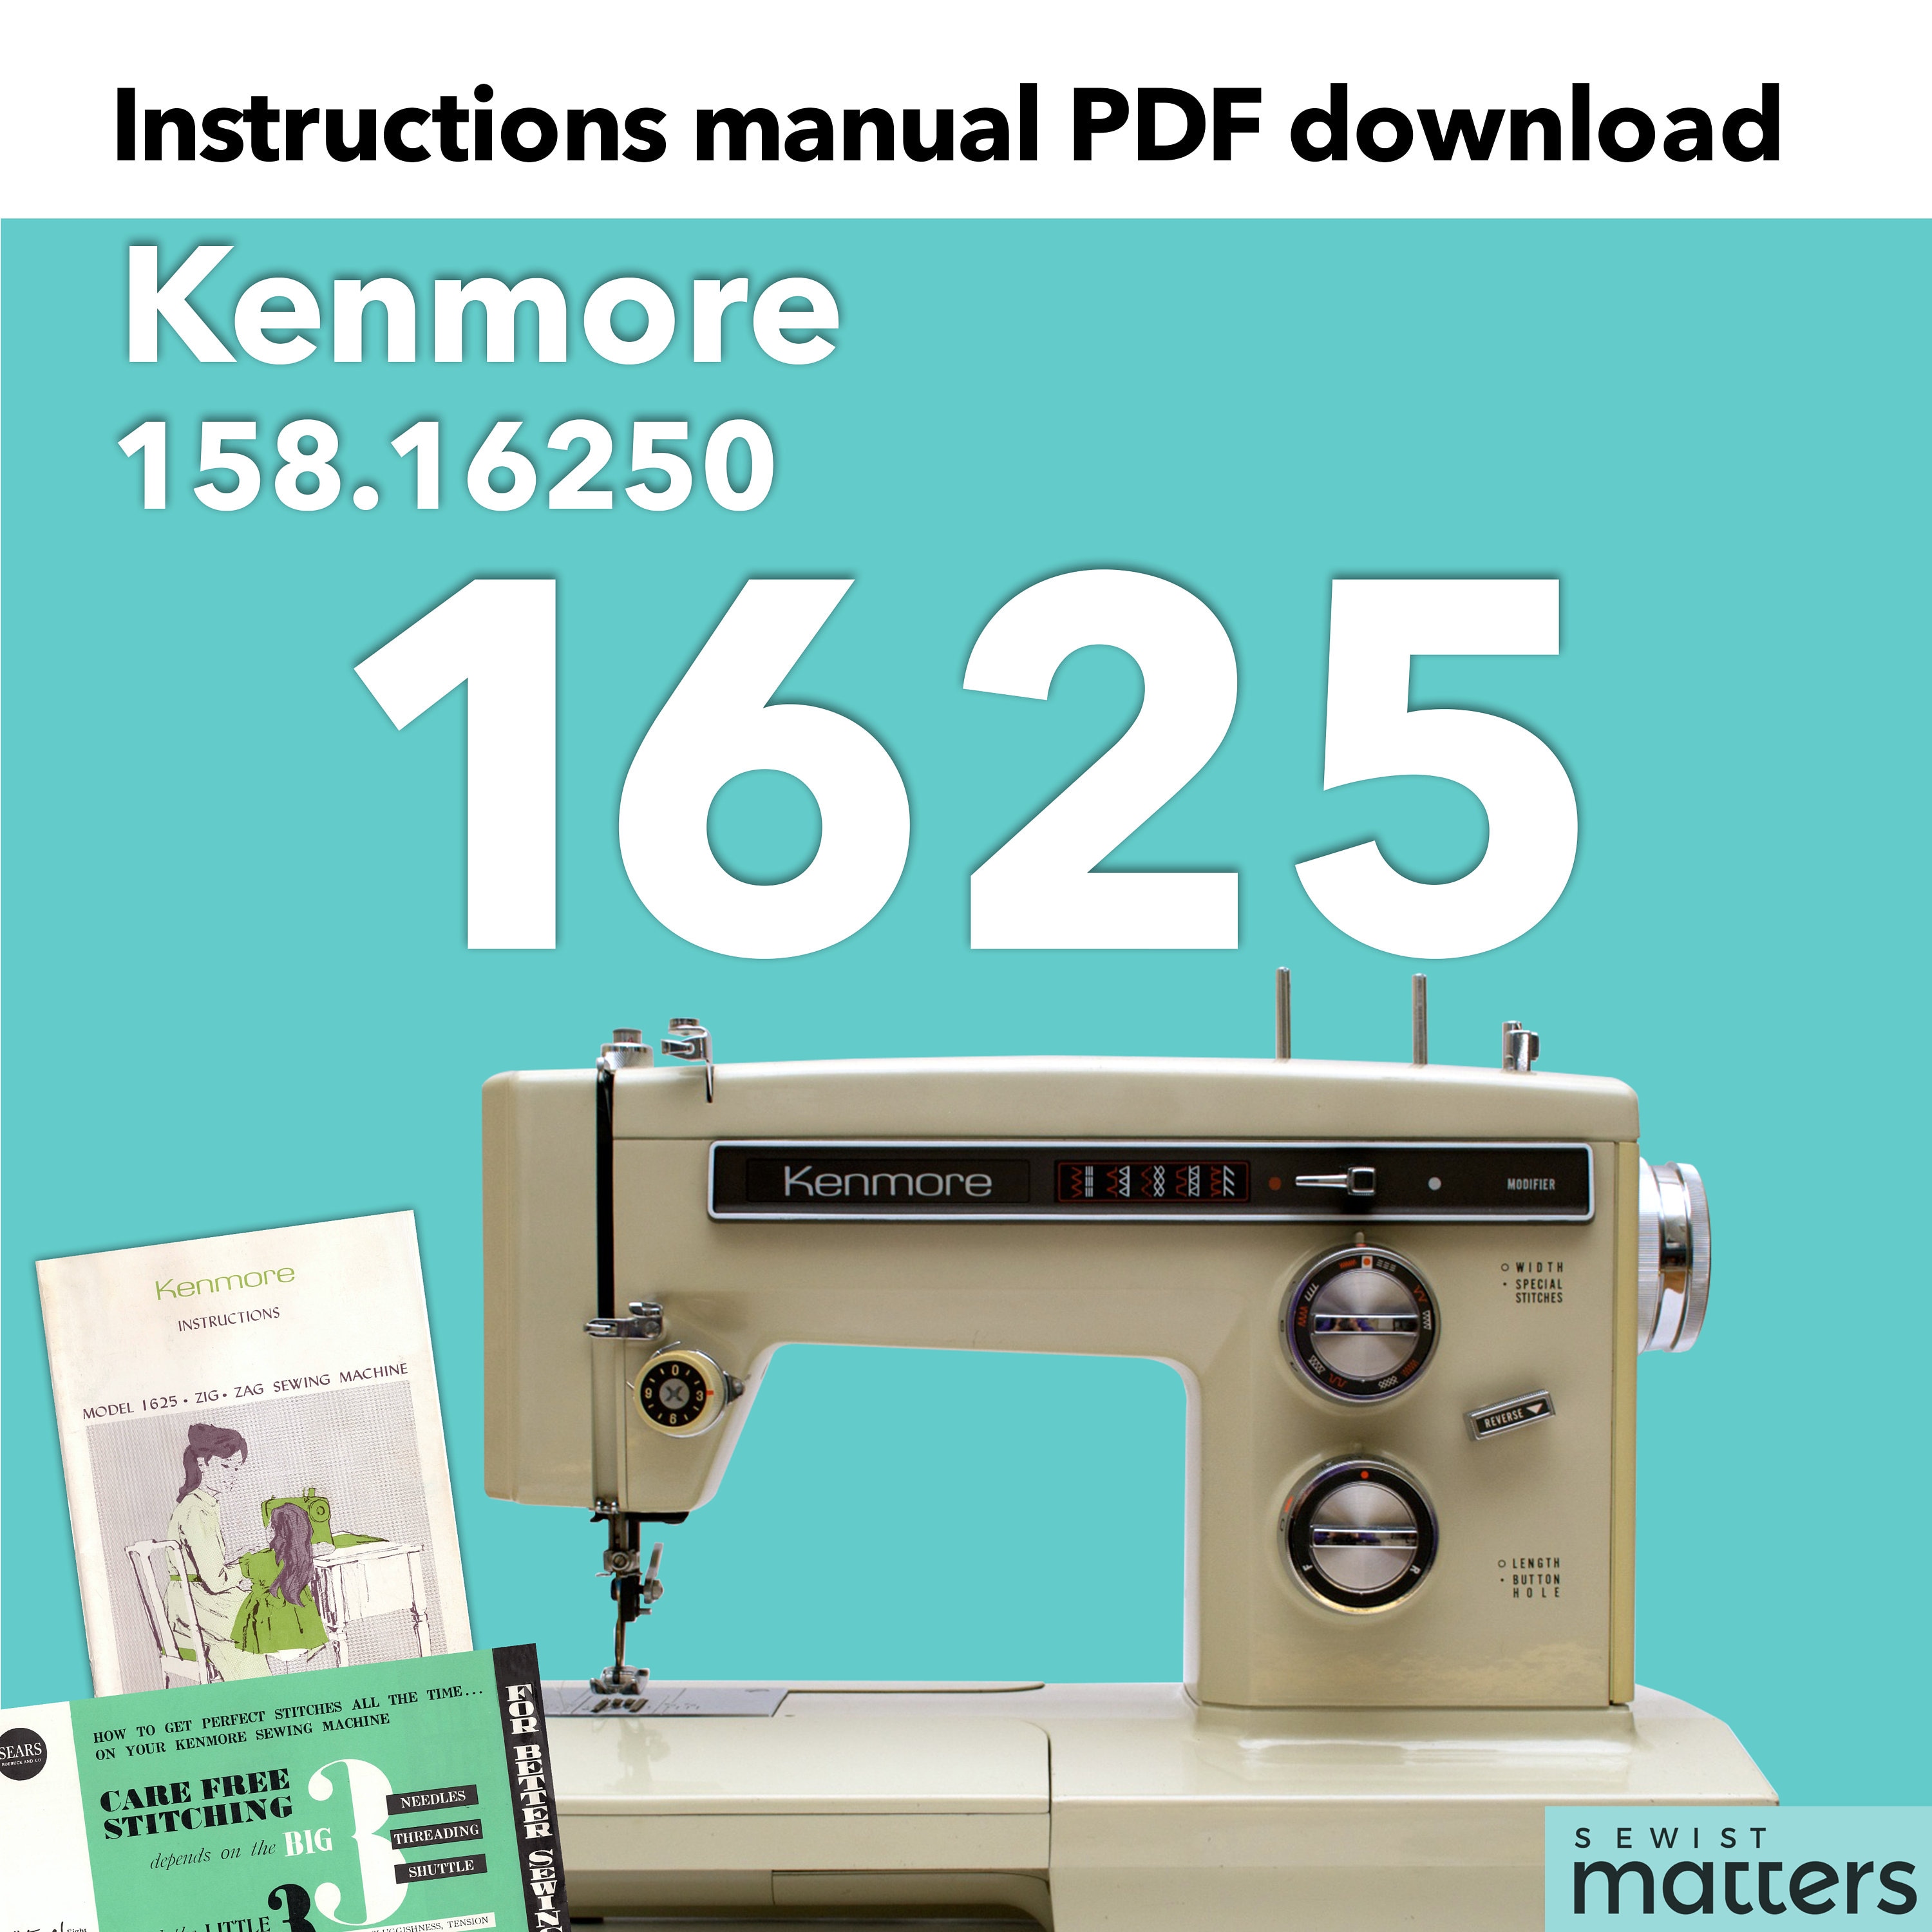 Kenmore 1700 158.17000 158.001 Zig-zag Sewing Machine 